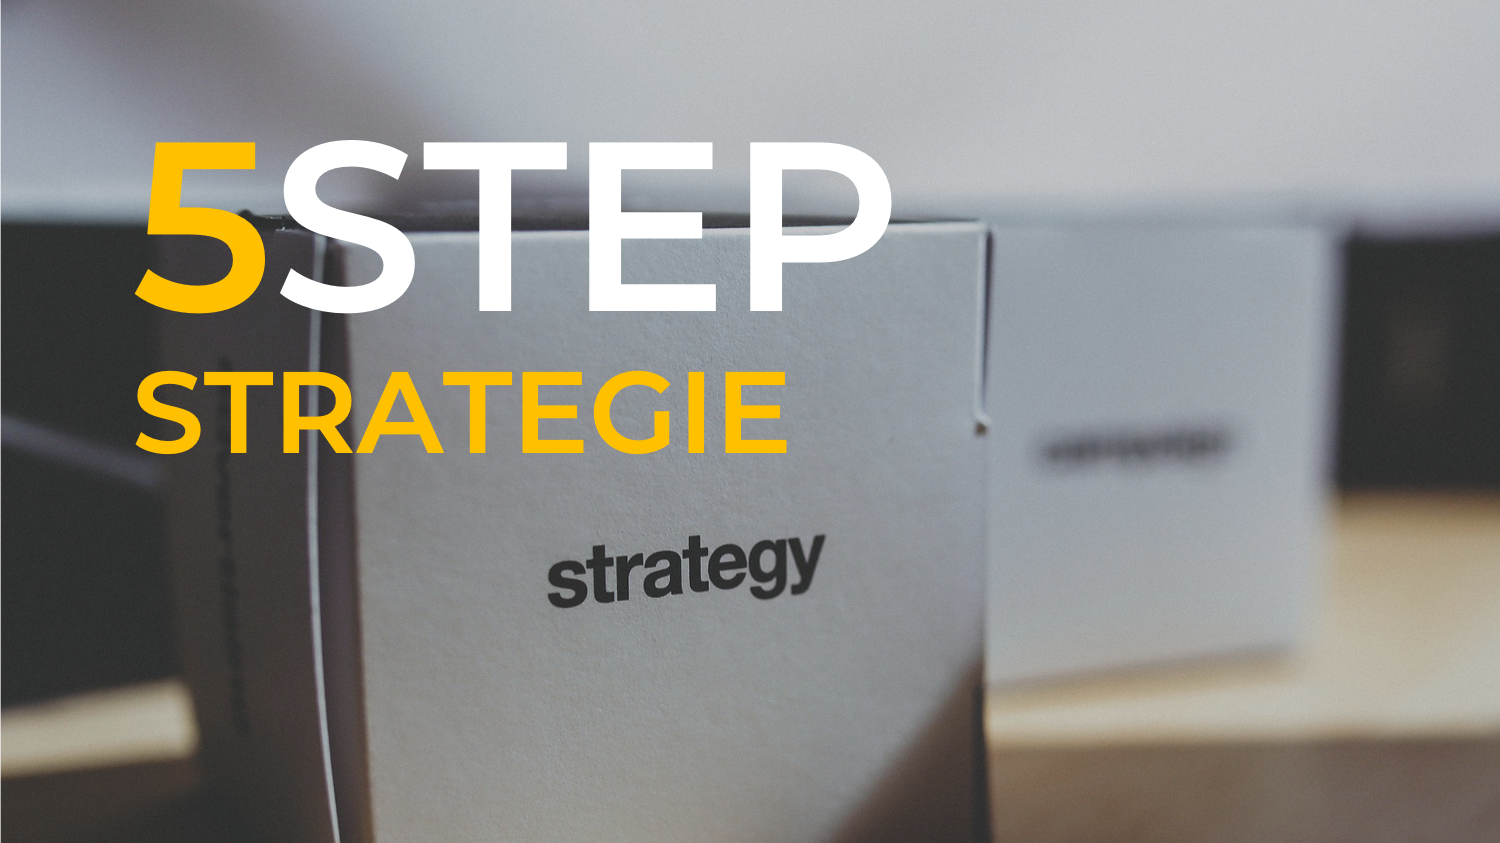 5STEP-Strategy HEADER _BOX.png